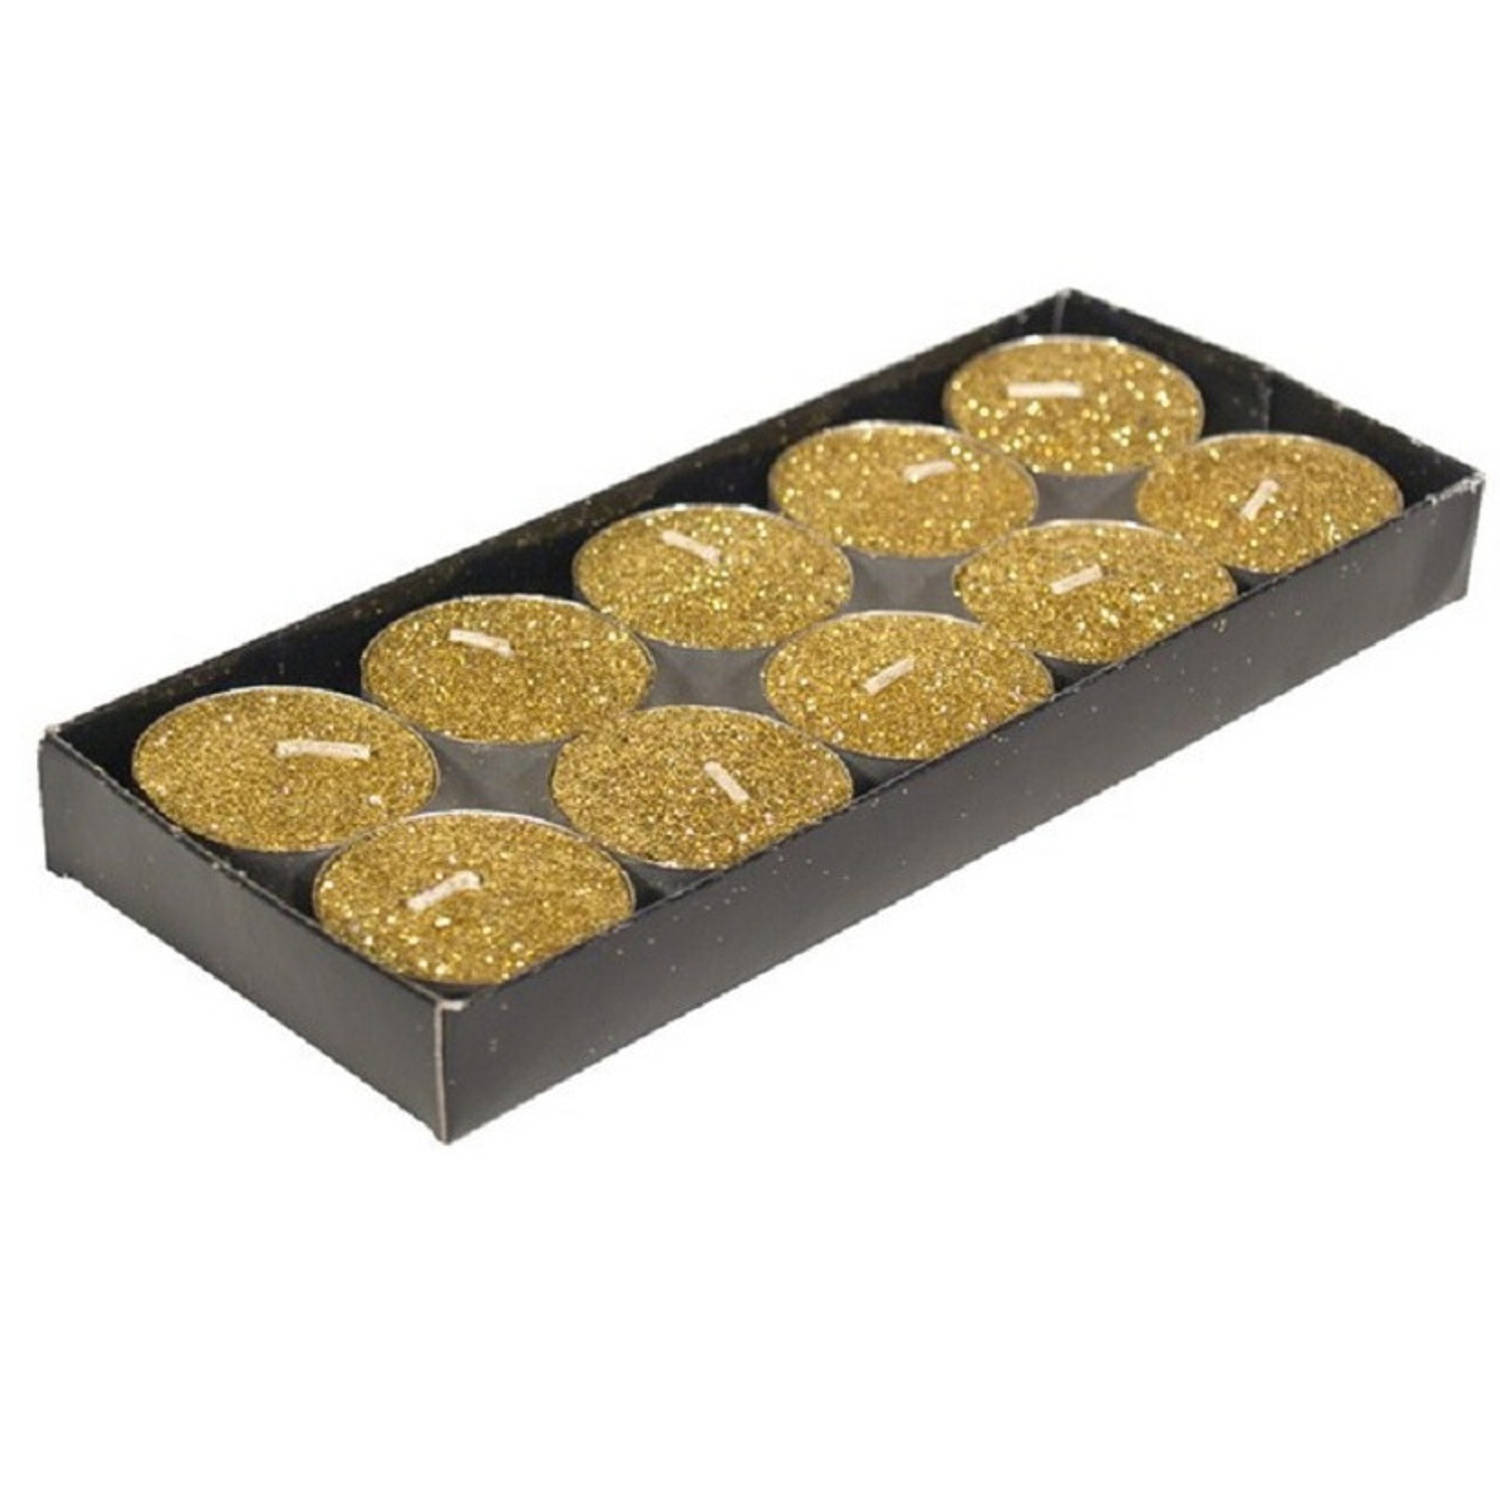 Gerimport theelichtjes/waxinelichtjes kaarsjes- 10x - goud glitters 3,5 cm